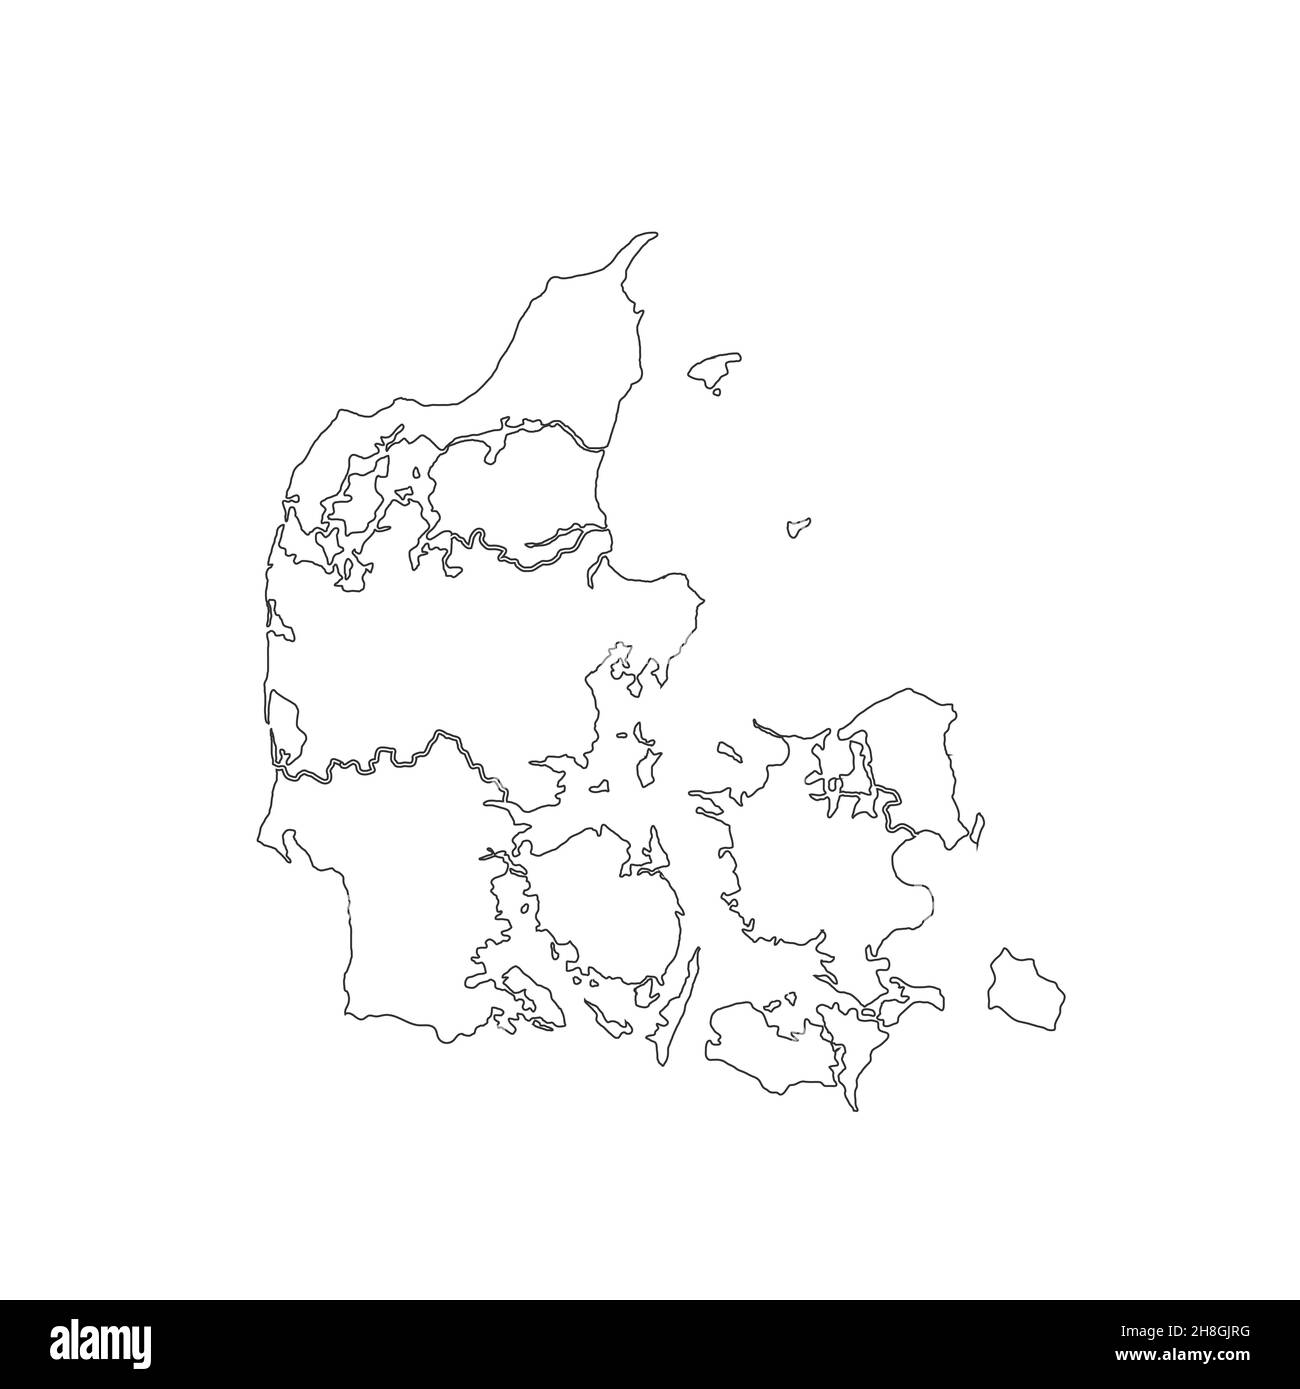 Denmark map using black border on white background Stock Photo